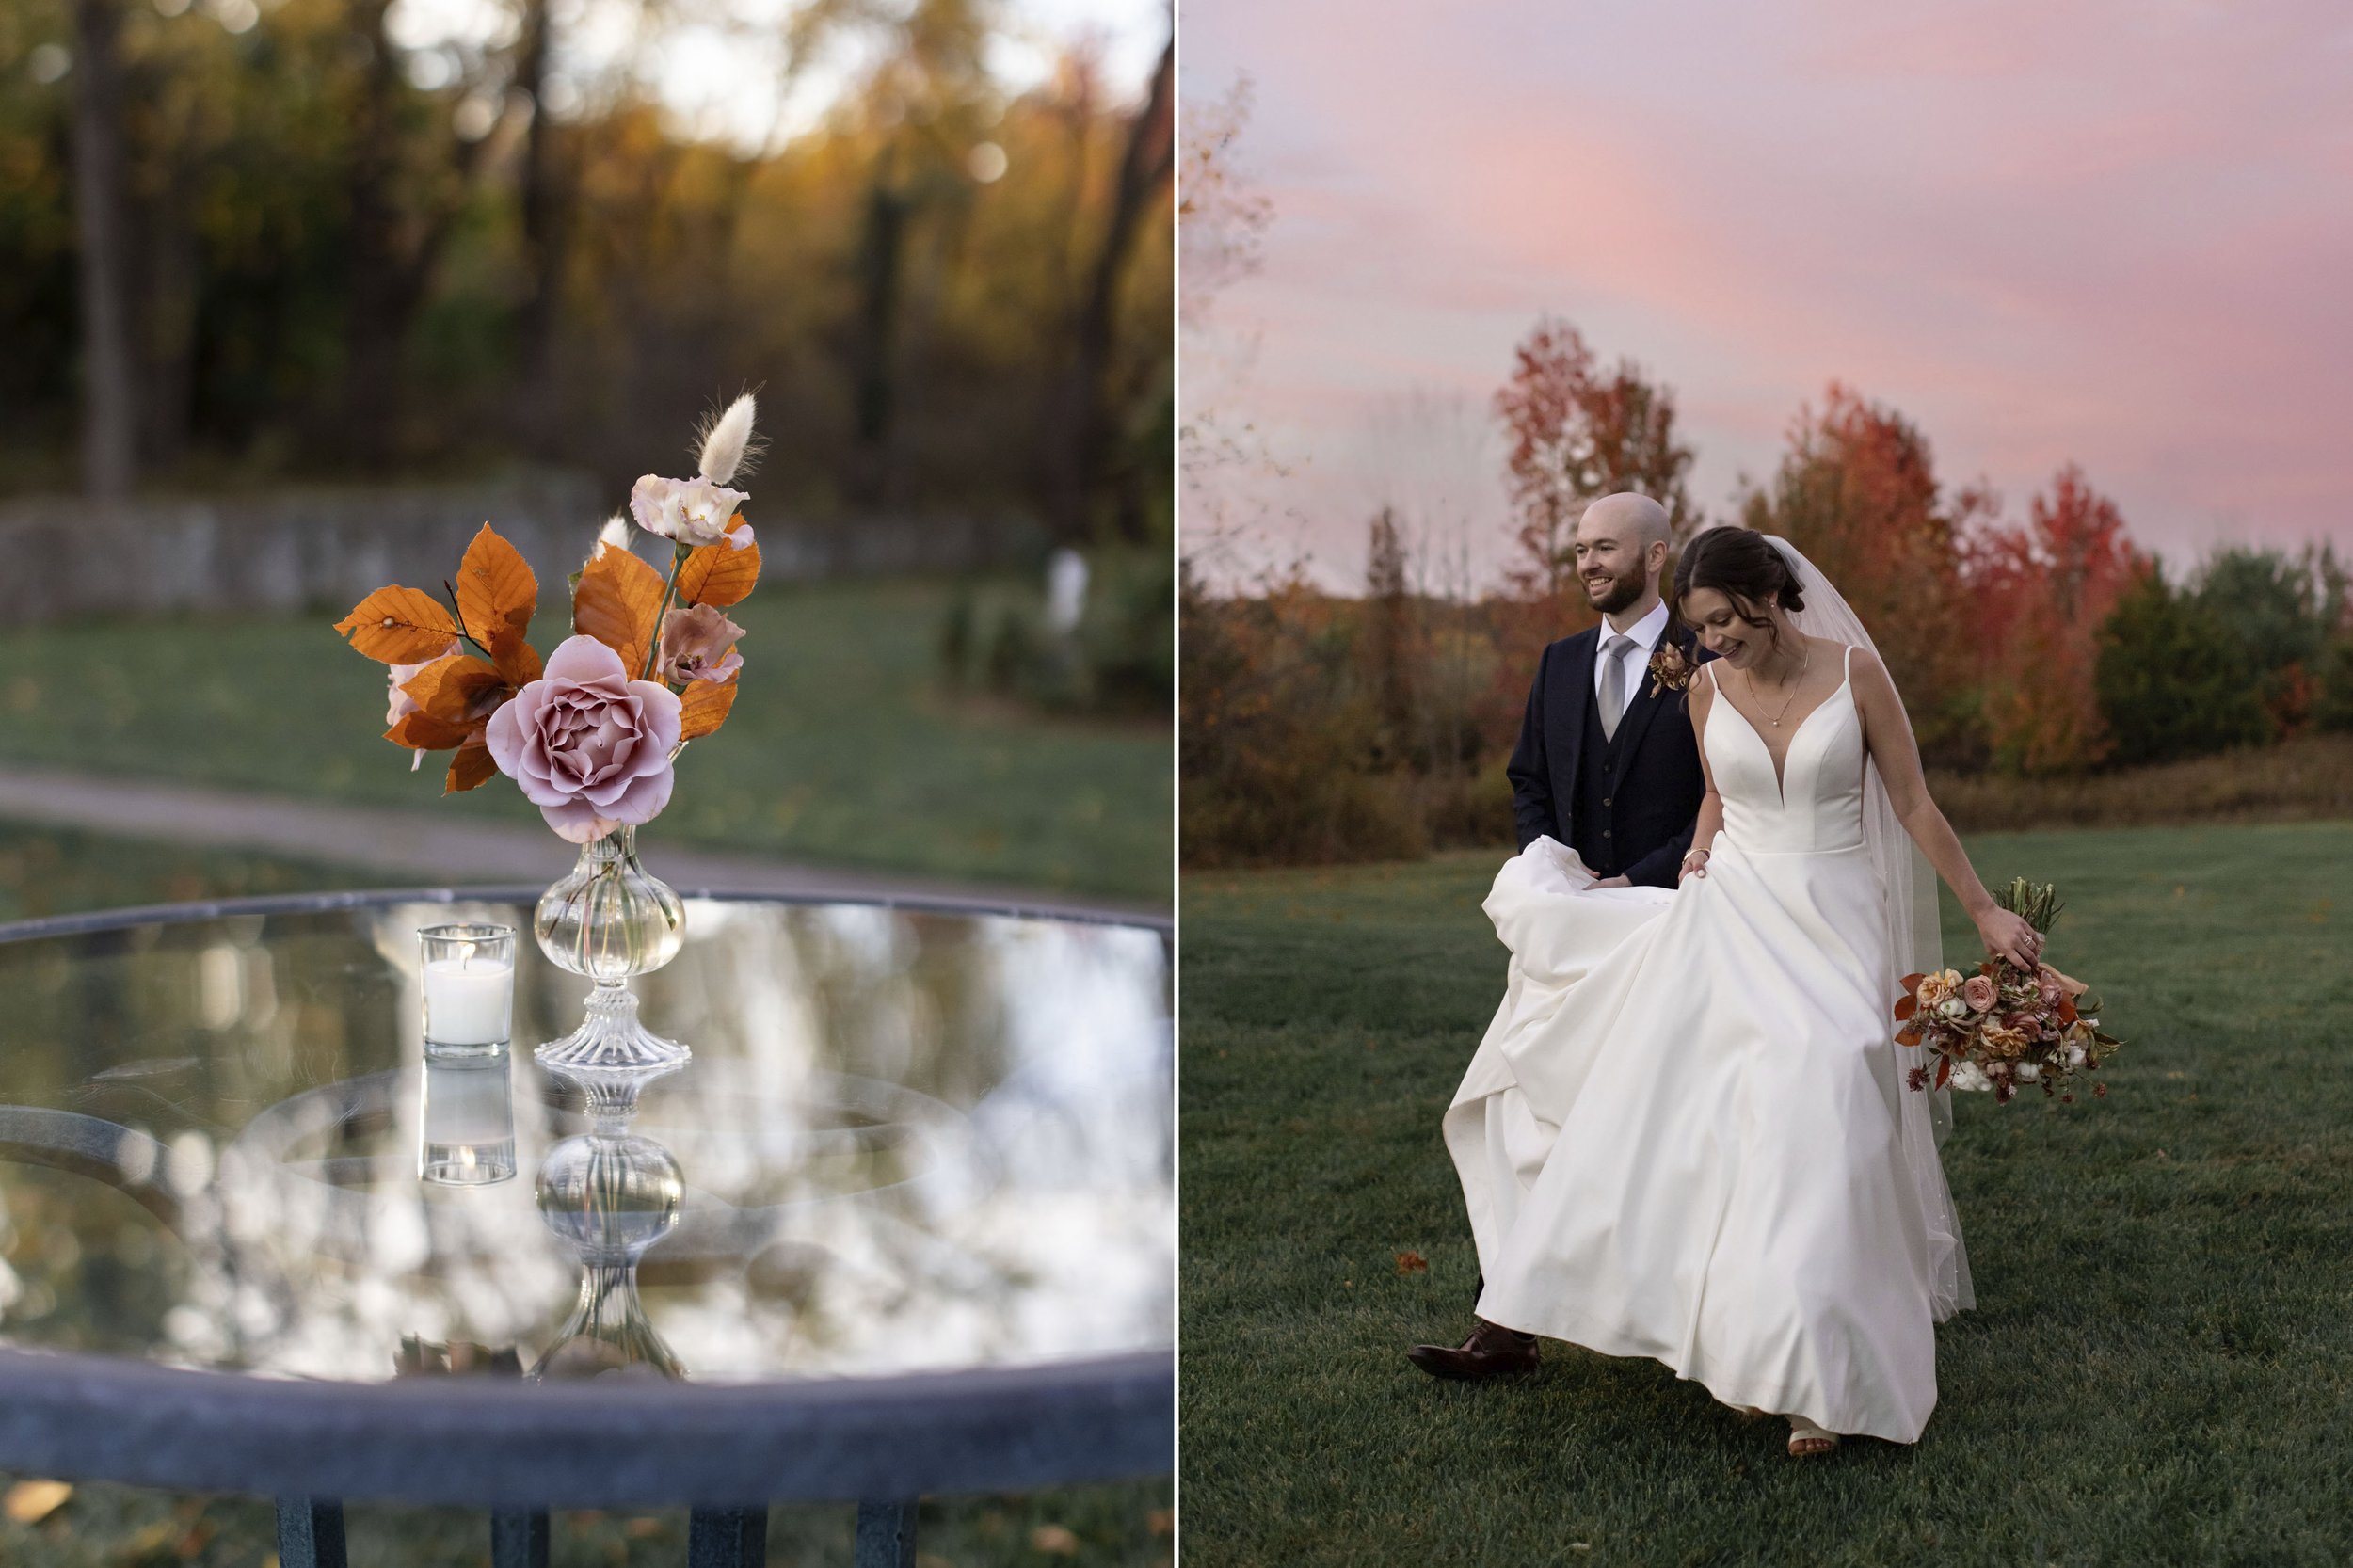 ash-smith-photo-studio-weddings-portfolio-3.jpg